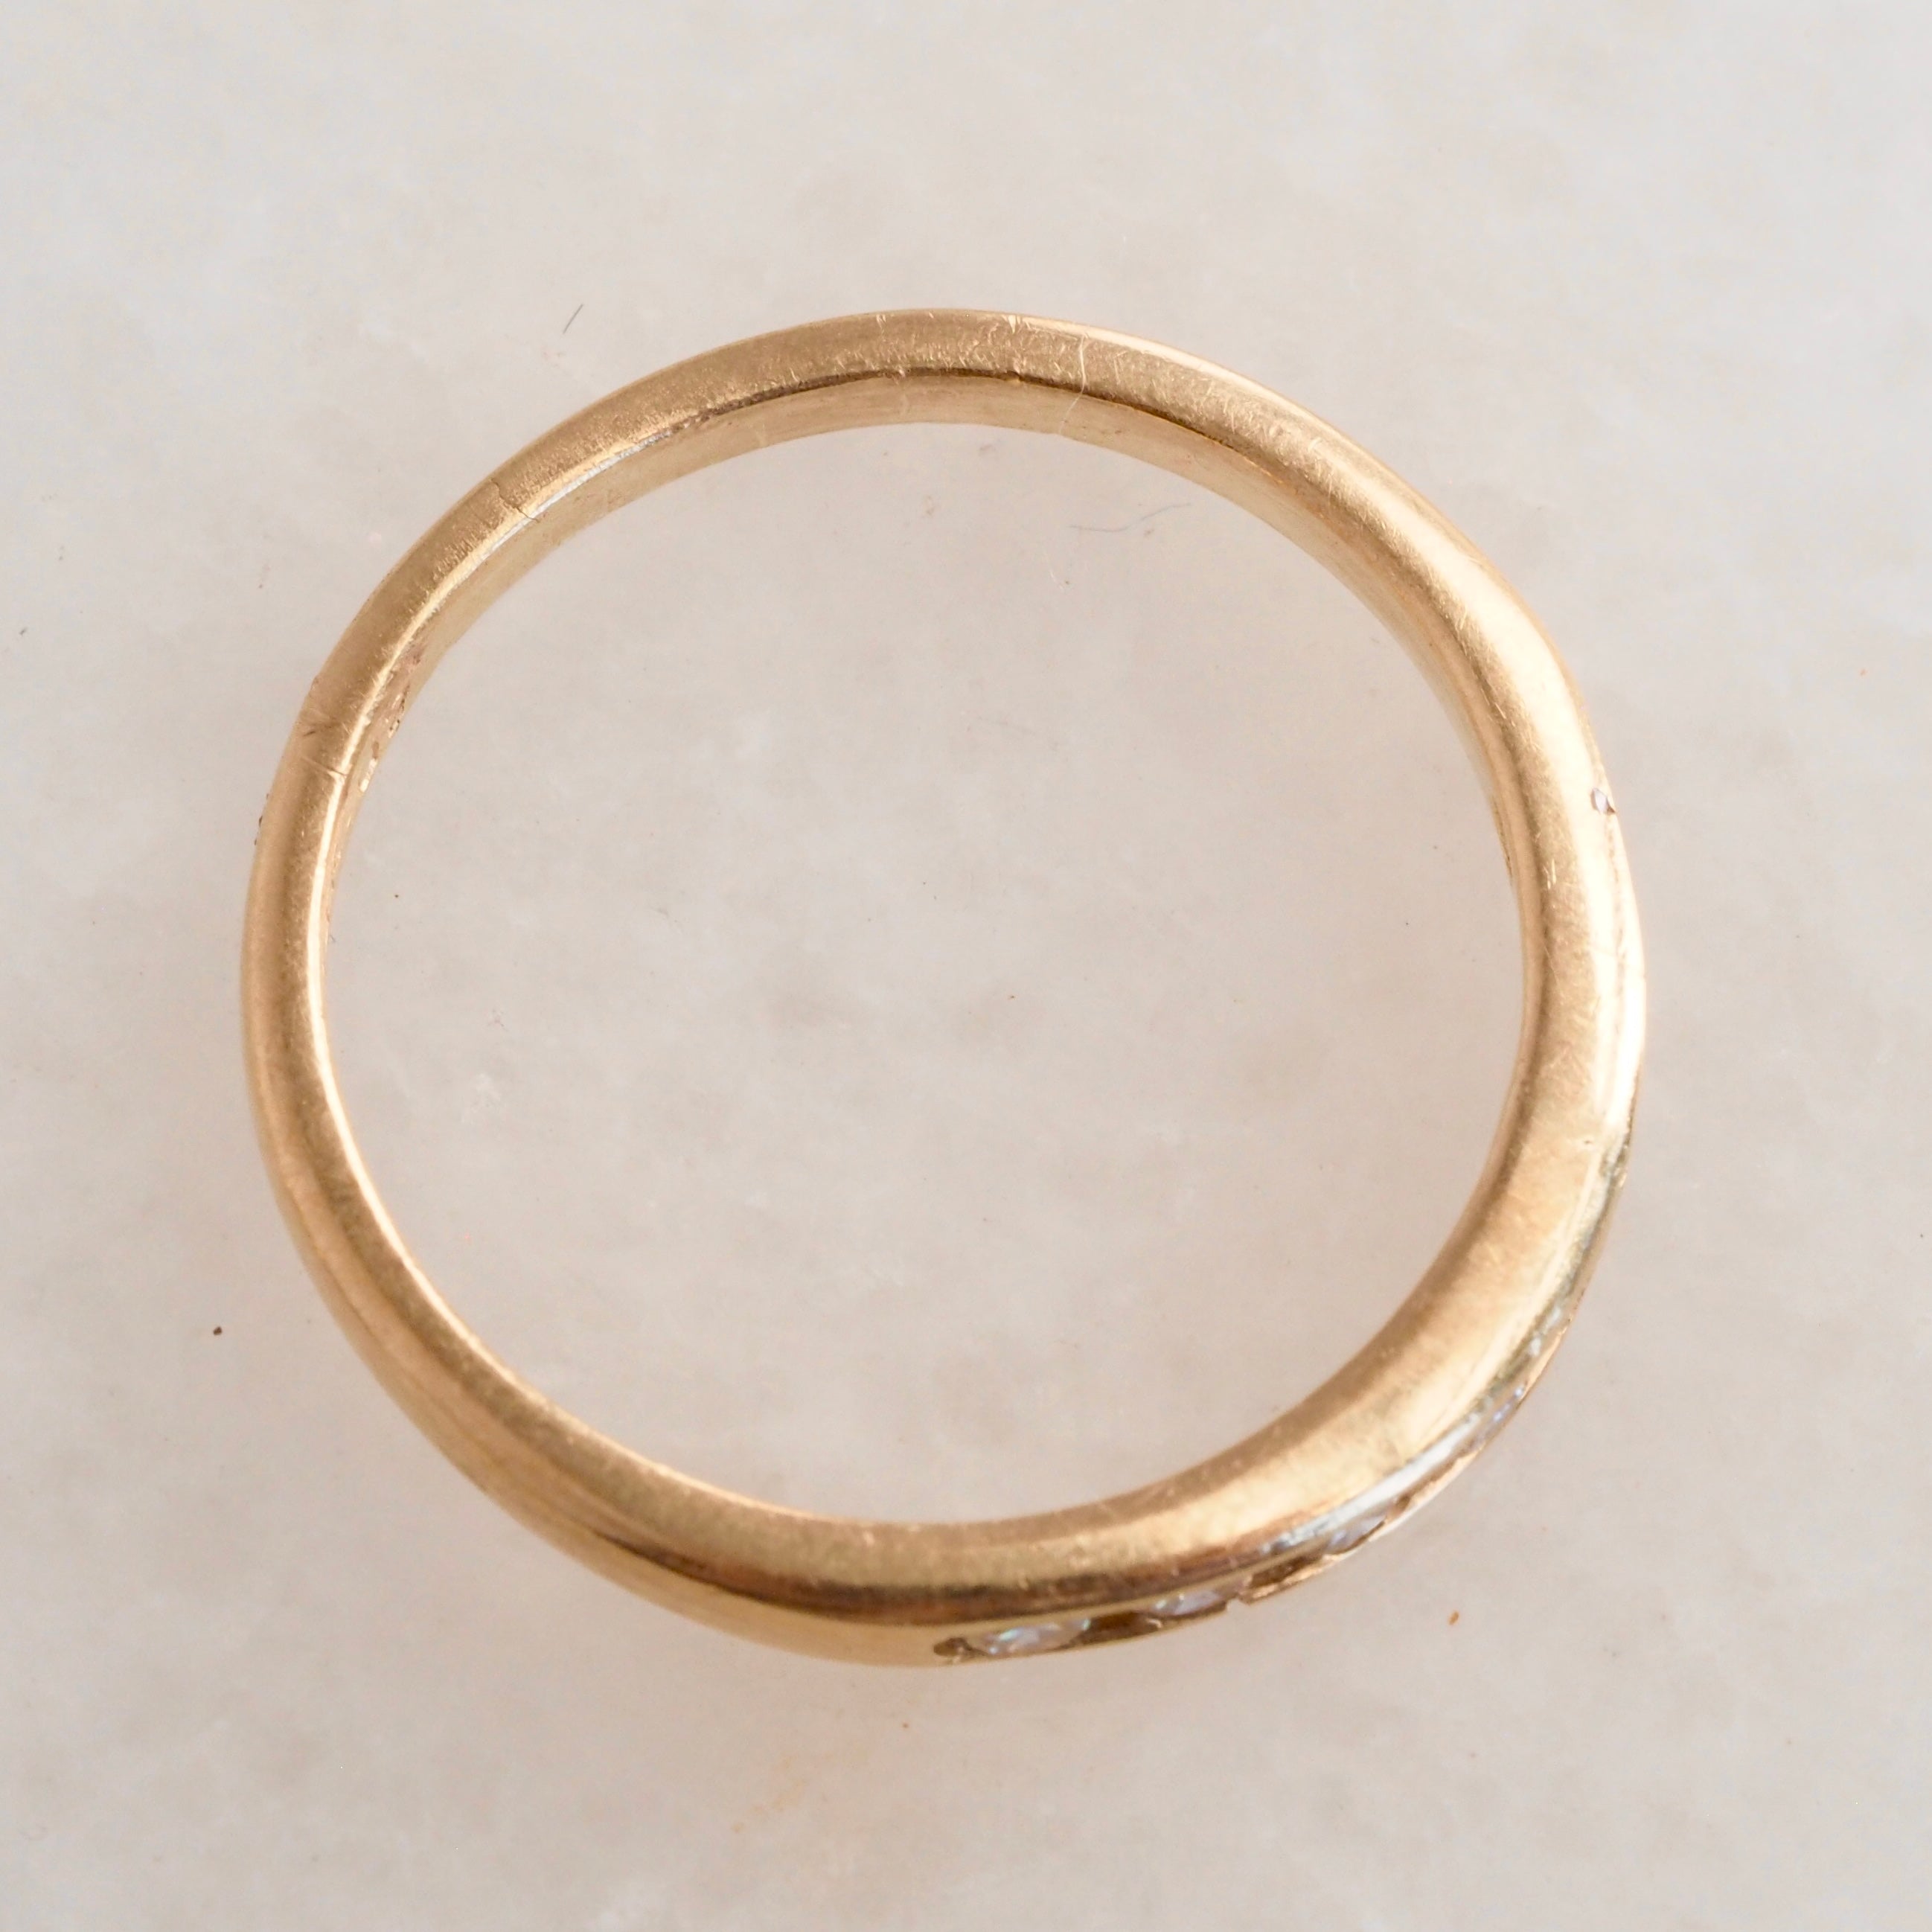 Vintage 14k Gold Round Brilliant Cut Diamond Ring Set